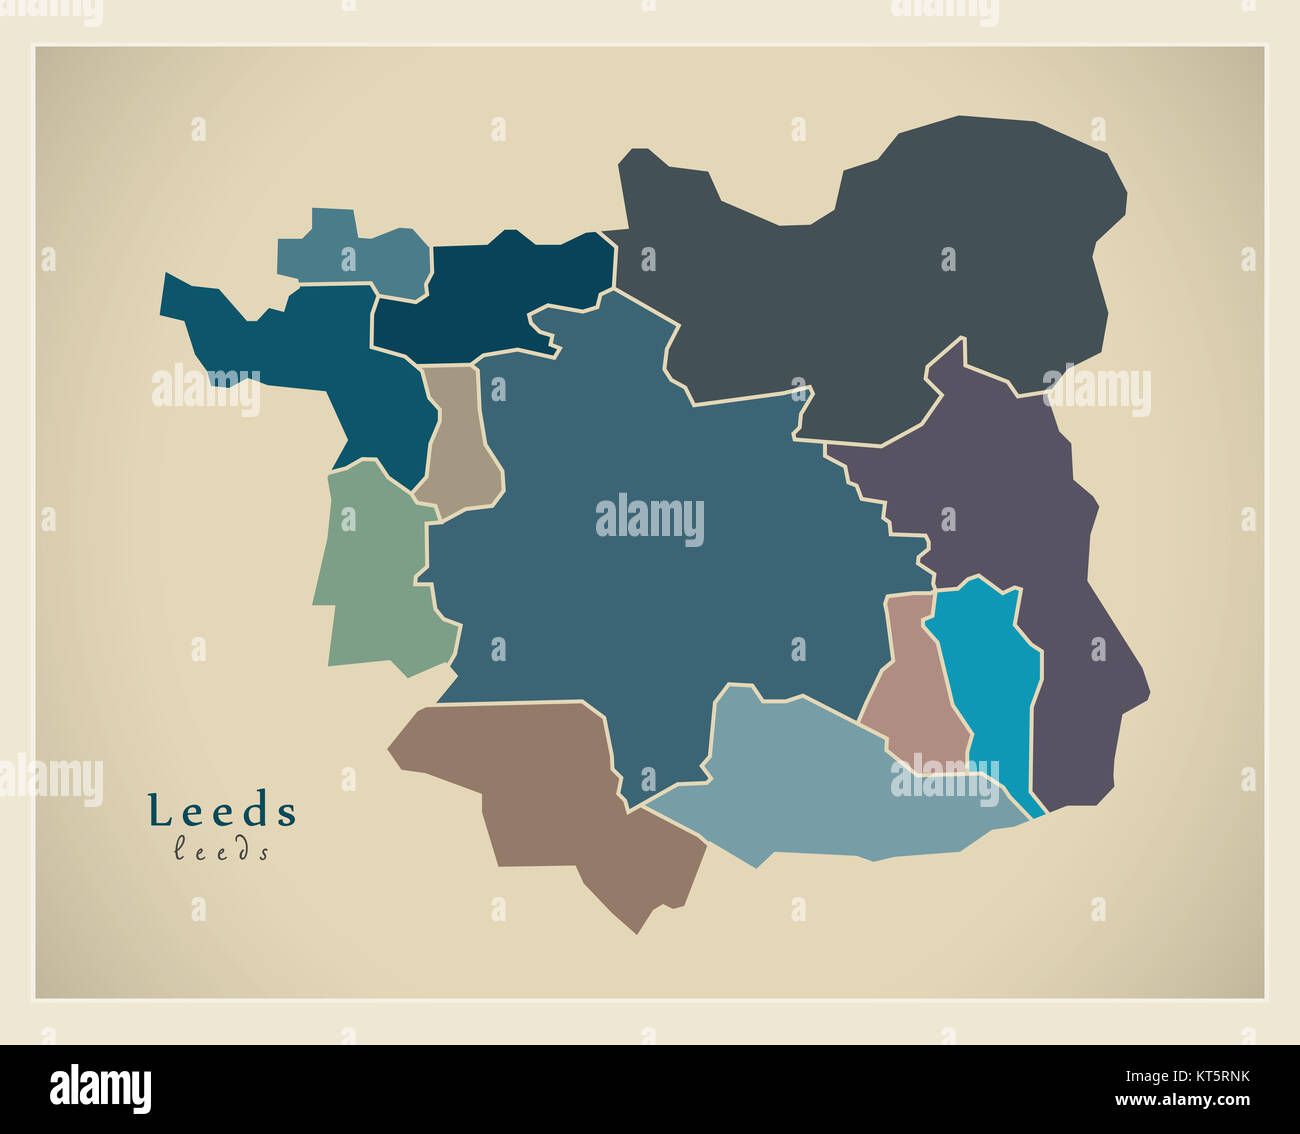 Modern City Maps - Leeds with boroughs coloured England illustration Stock Photo